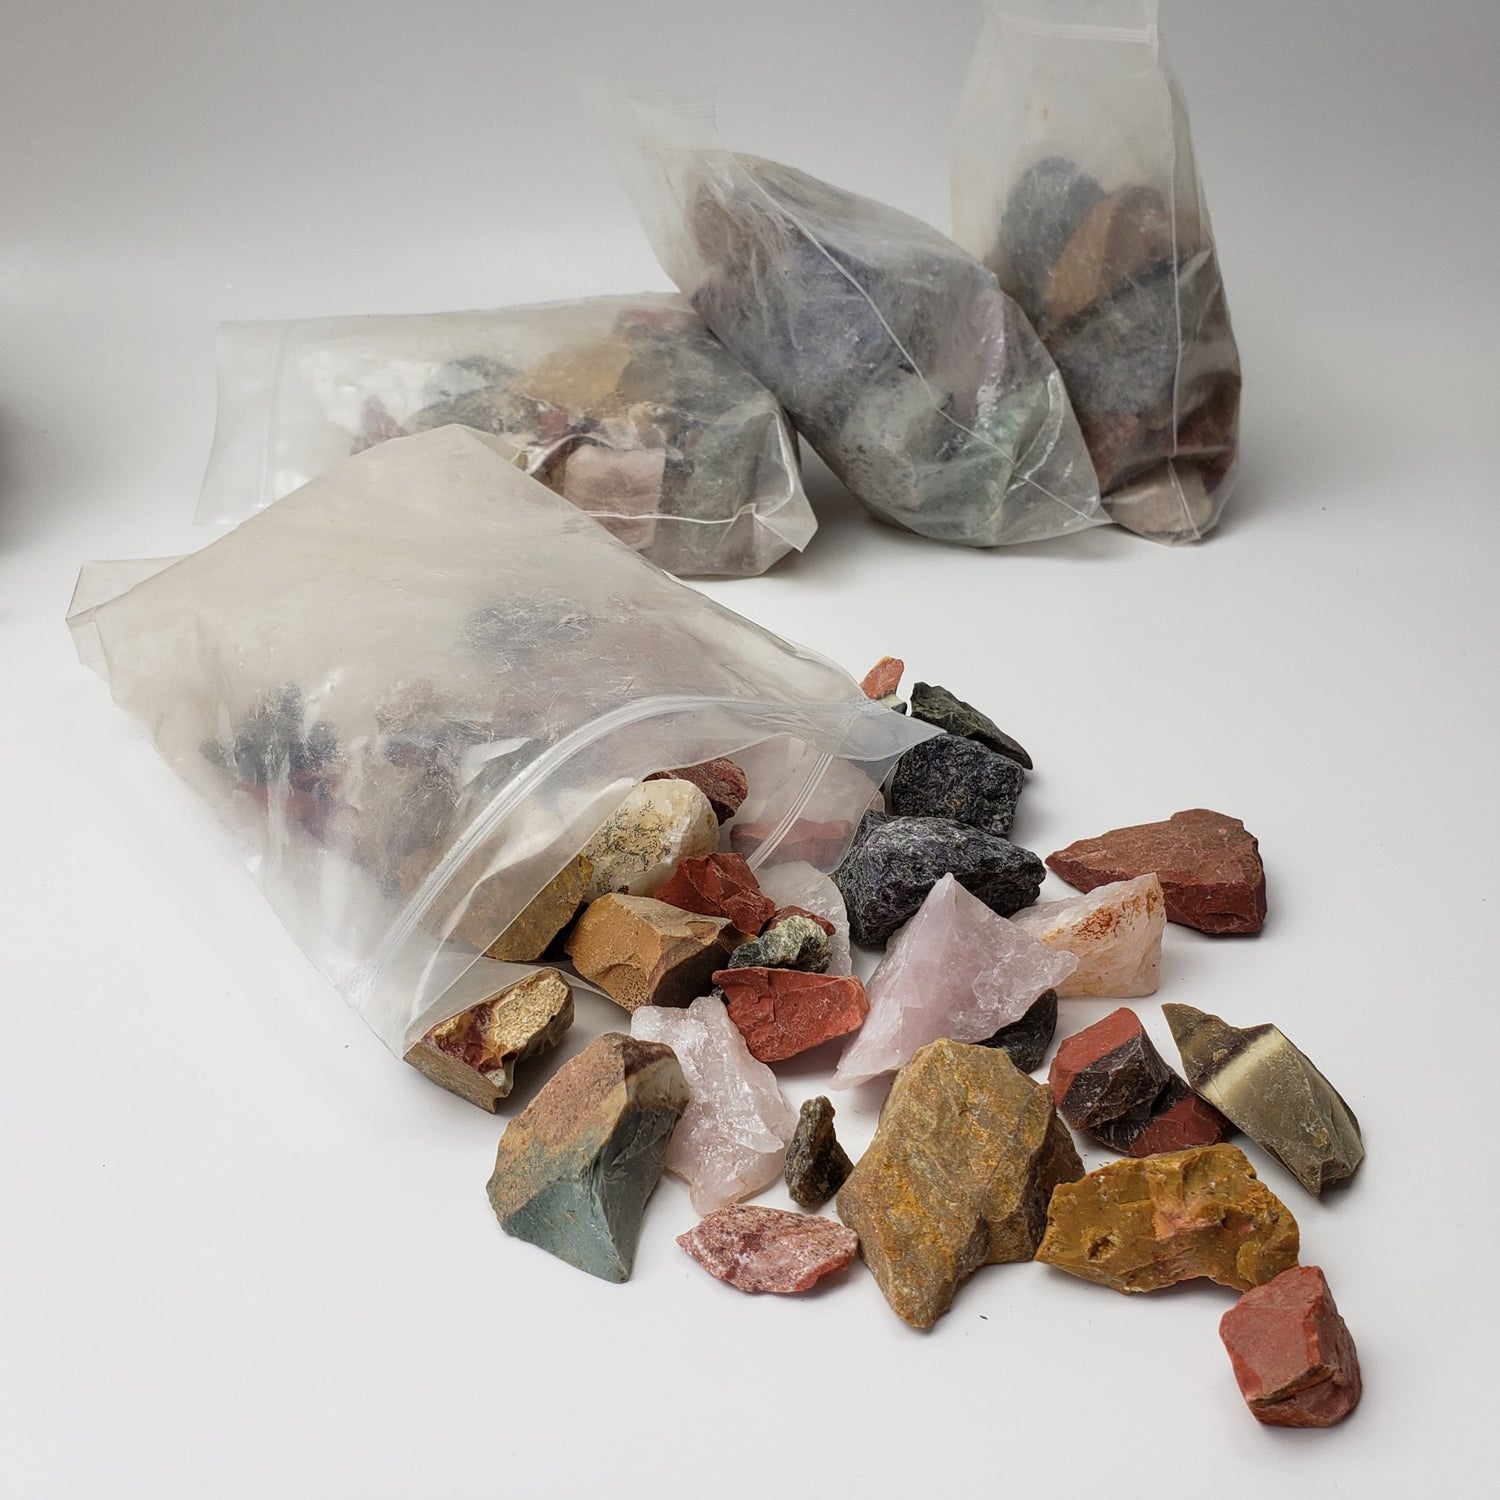 Rock Tumbler Madagascar Mixed Rocks Refill Kit |Gemstones and Rocks for Tumbling | 4 Pounds